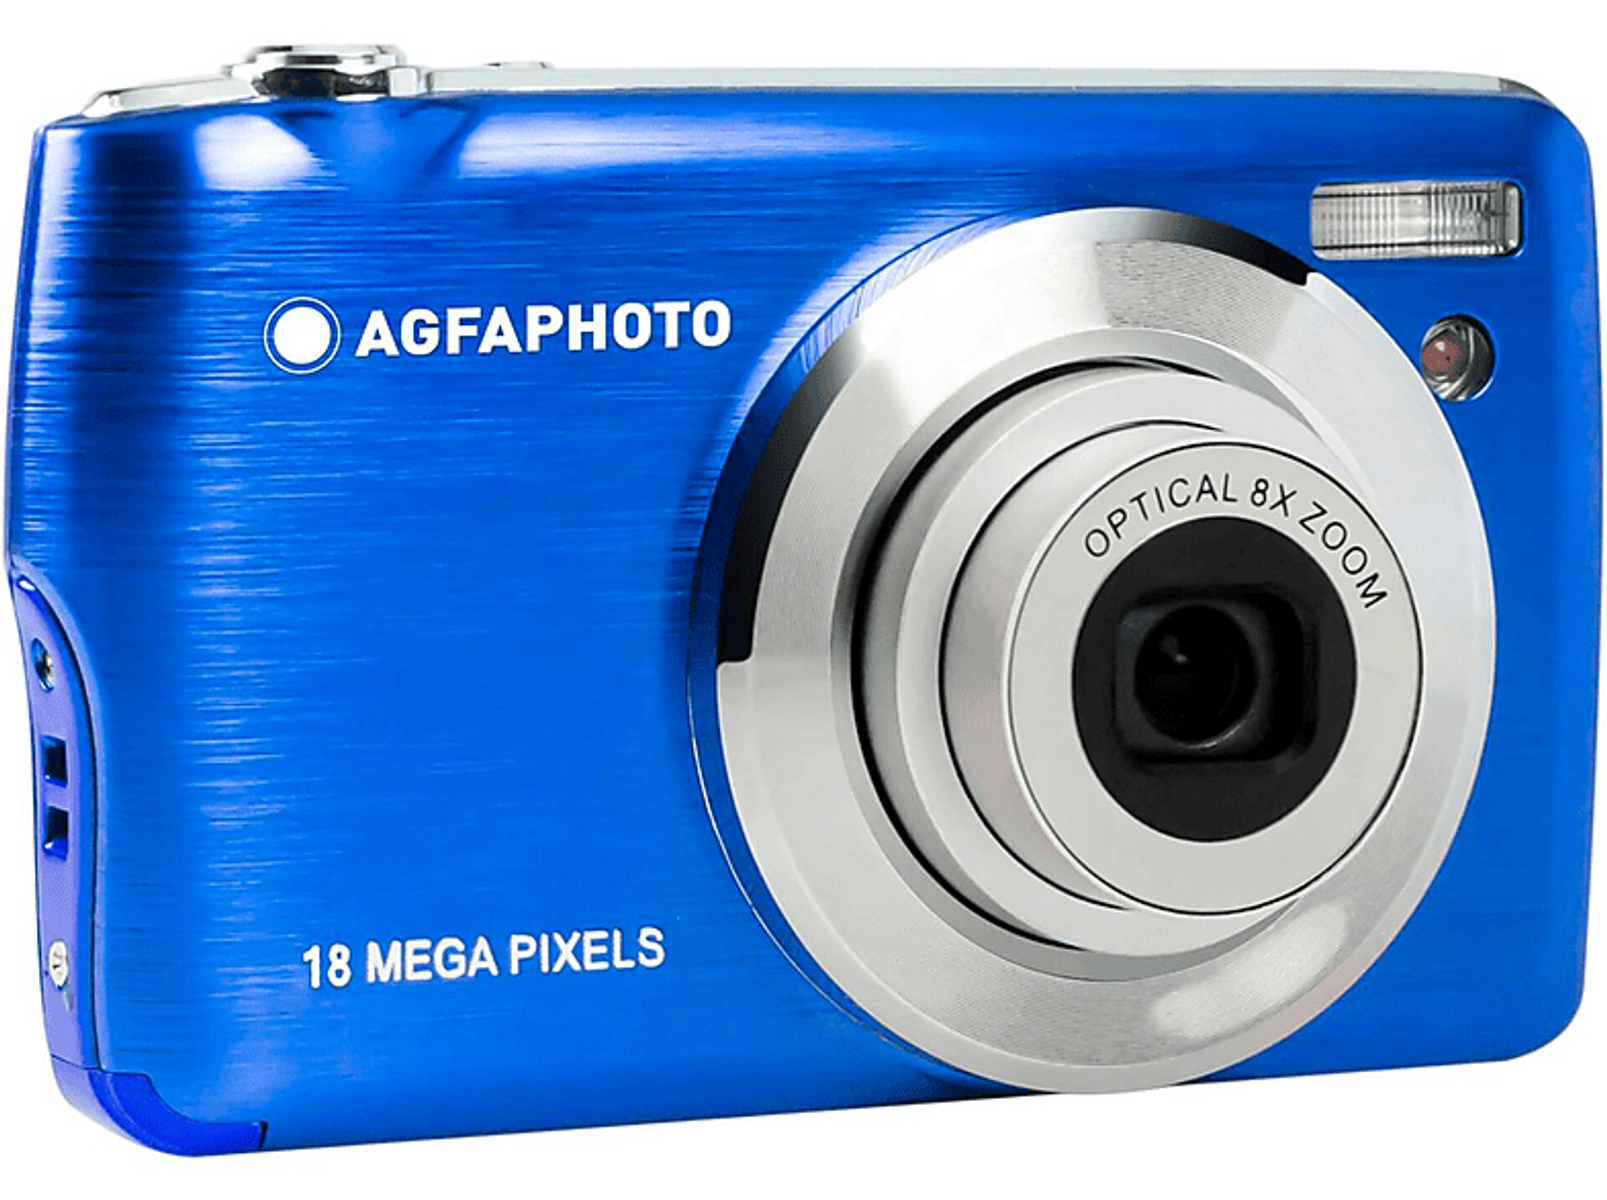 AGFAPHOTO Realishot DC8200 blau Digitalkamera LCD Zoom, TFT- x 8 opt. blau, mit LCD-Backlight